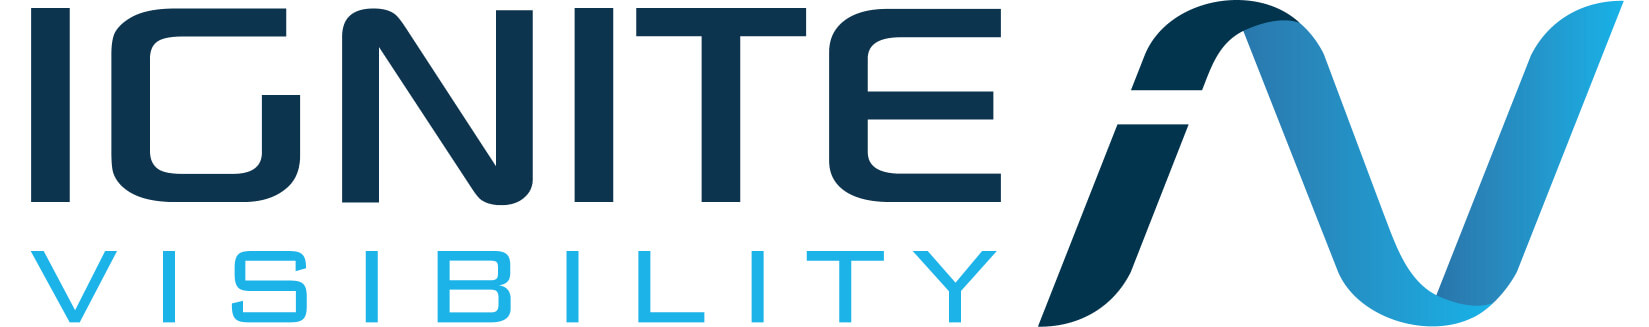 Top Dental SEO Business Logo: Ignite Visibility